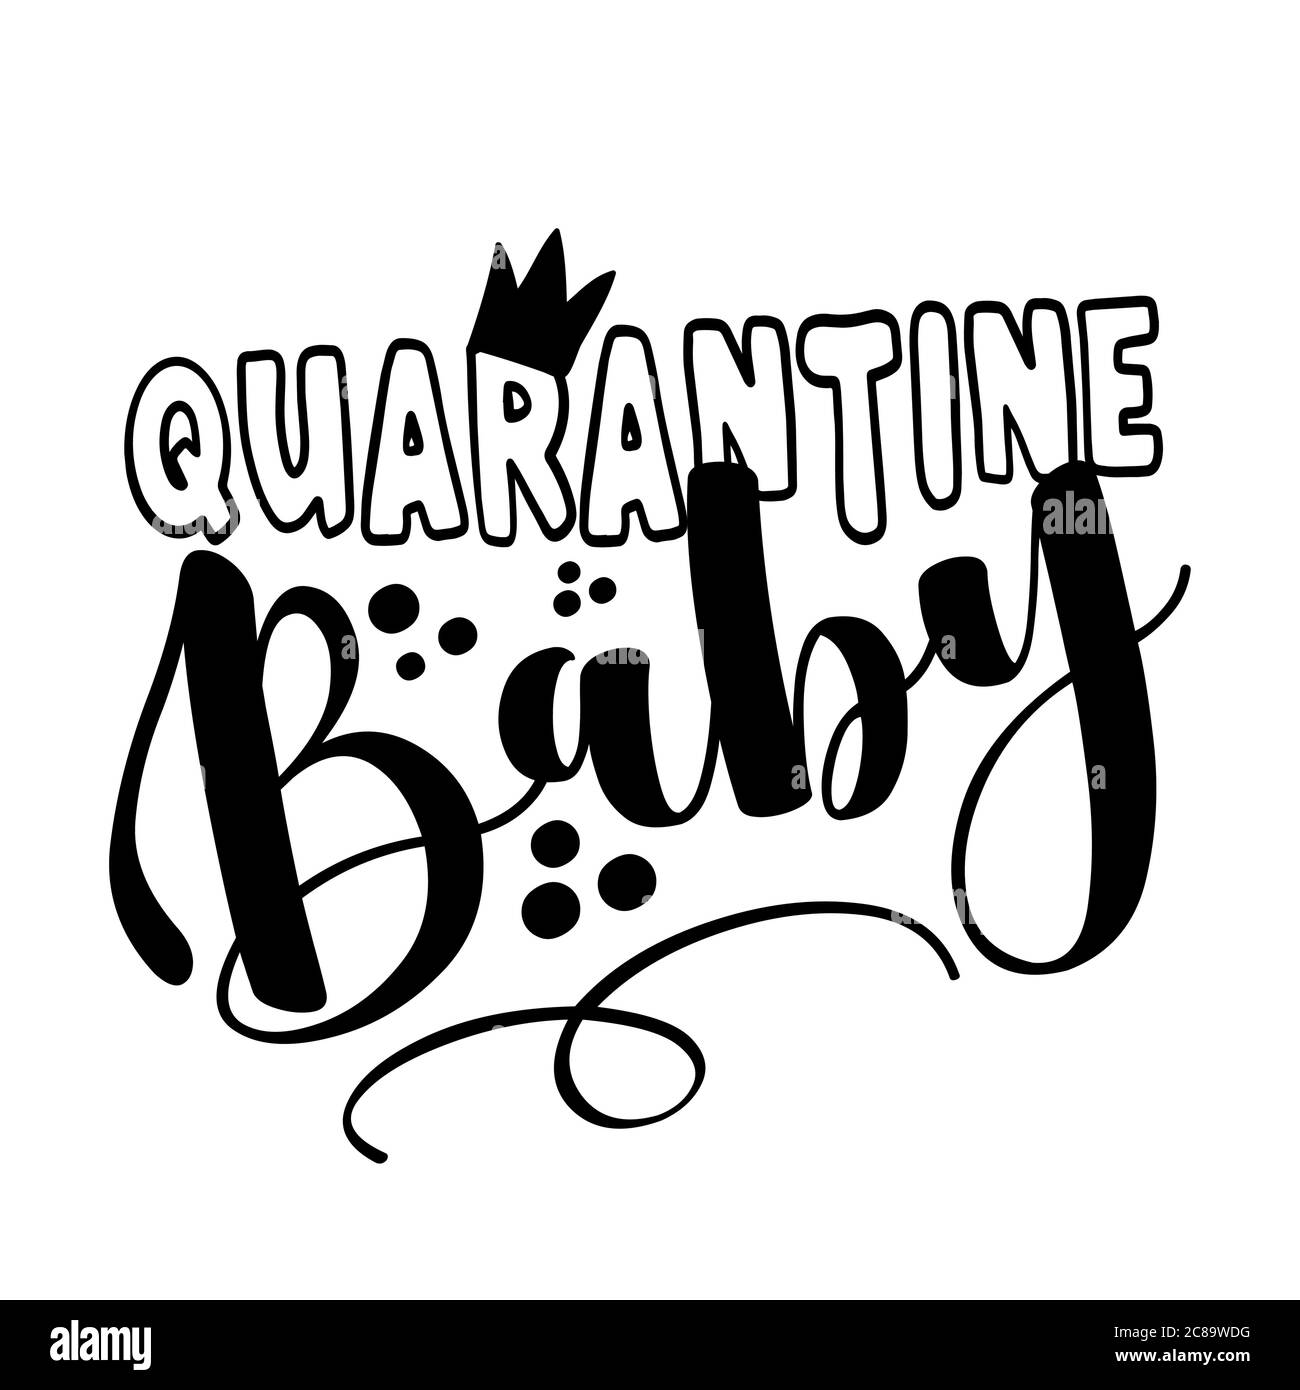 Quarantine baby - Made in Quarantine cute baby clothes decoration. Coronavirus  Covid-19 quarantine baby. Posters for nursery room, greeting cards, ki Stock Vector